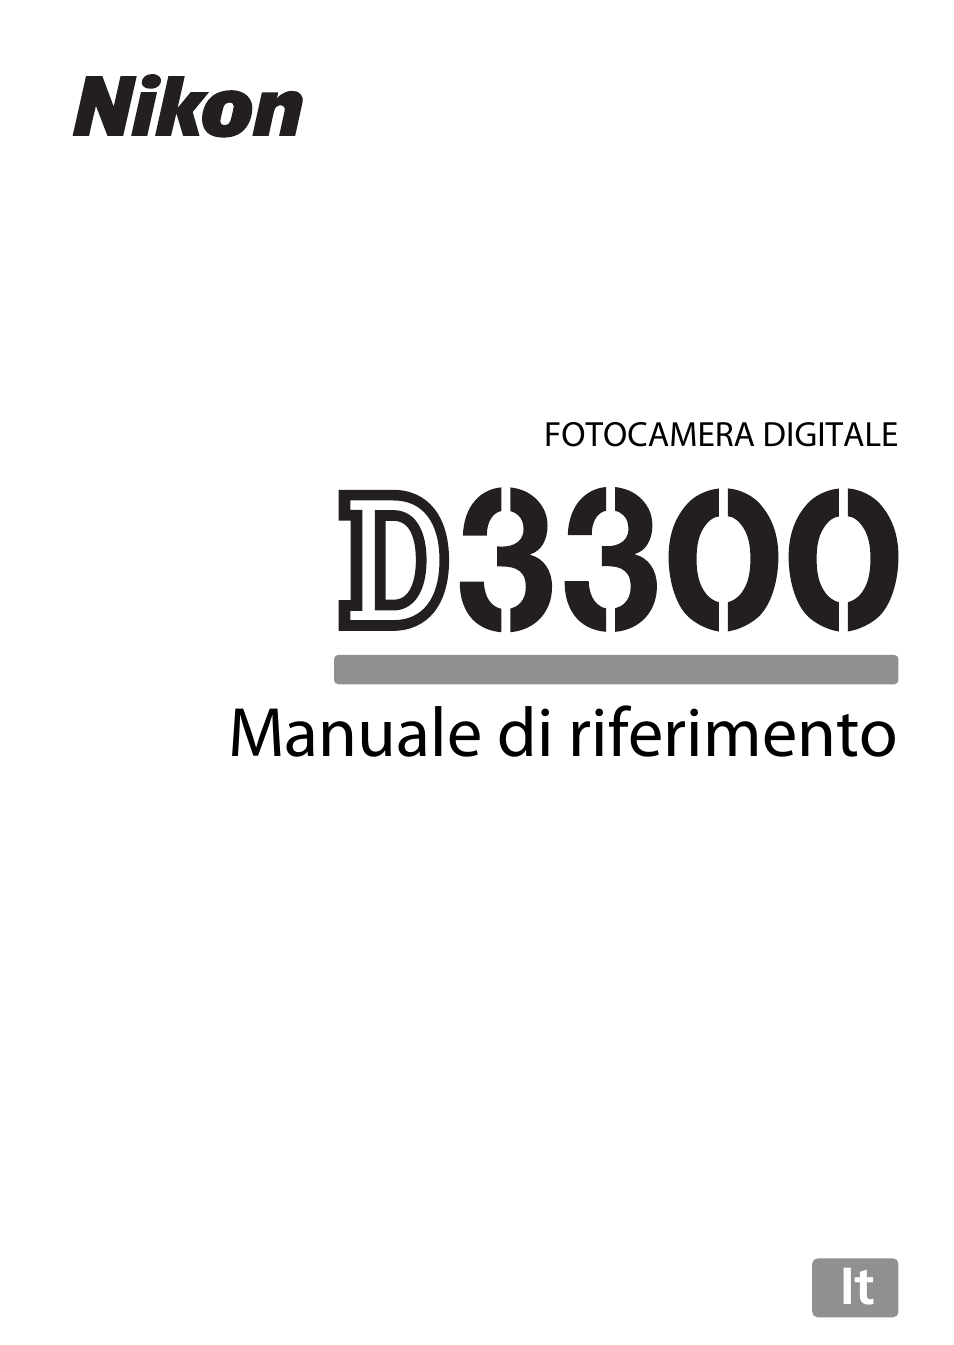 Nikon D3300 Manuale d'uso | Pagine: 392